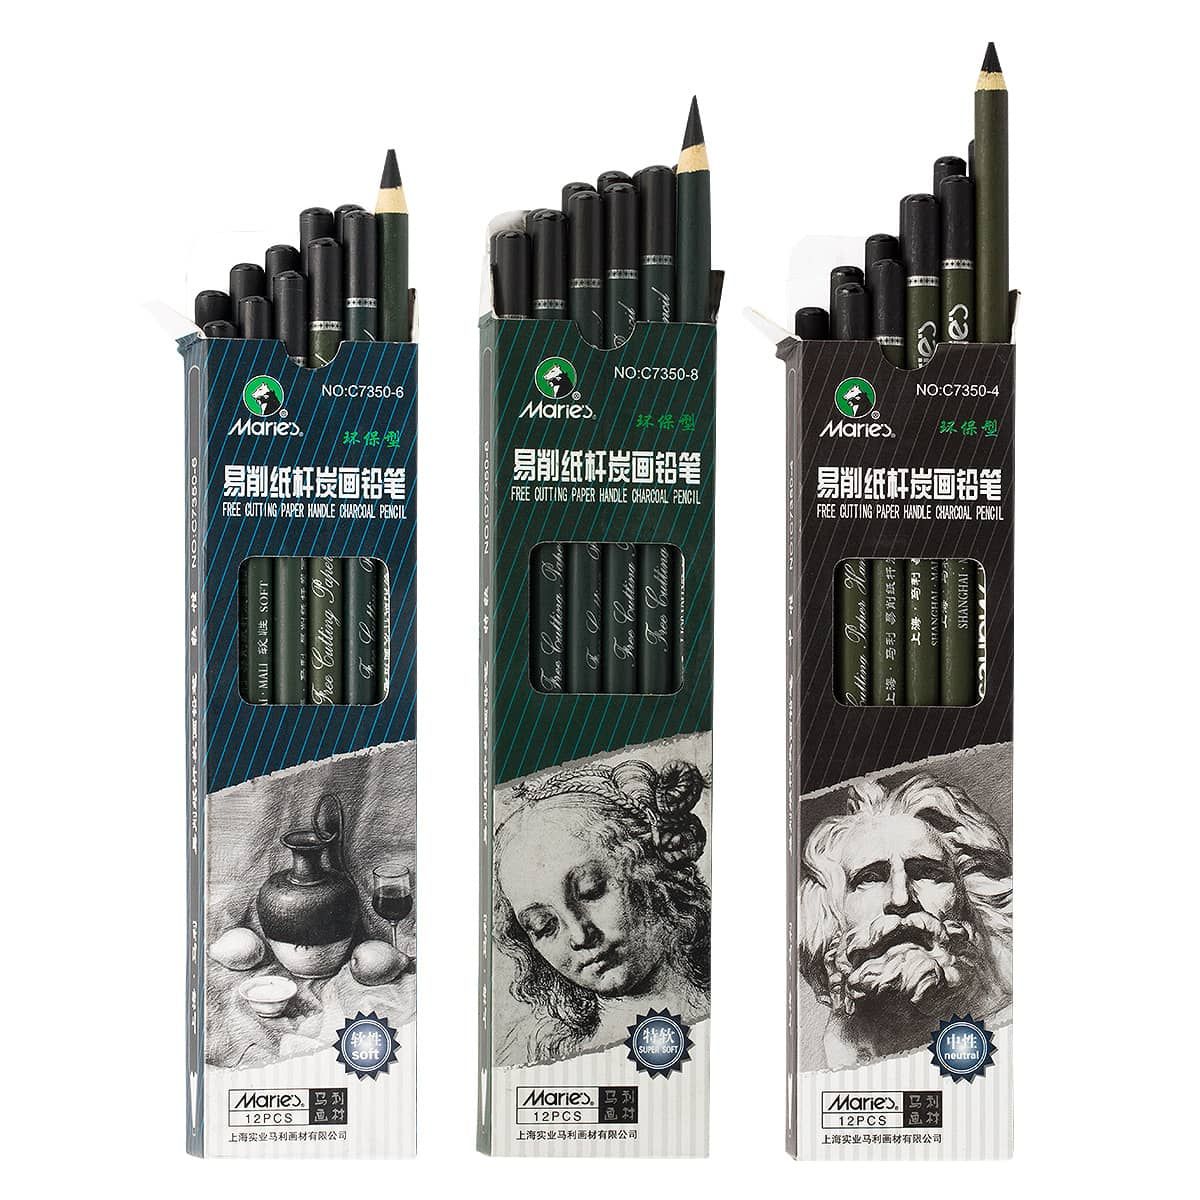 https://www.jerrysartarama.com/media/catalog/product/cache/ecb49a32eeb5603594b082bd5fe65733/e/r/eric-armusik-charcoal-drawing-artist-kit-maries-box12-pencils-m2-as0070.jpg